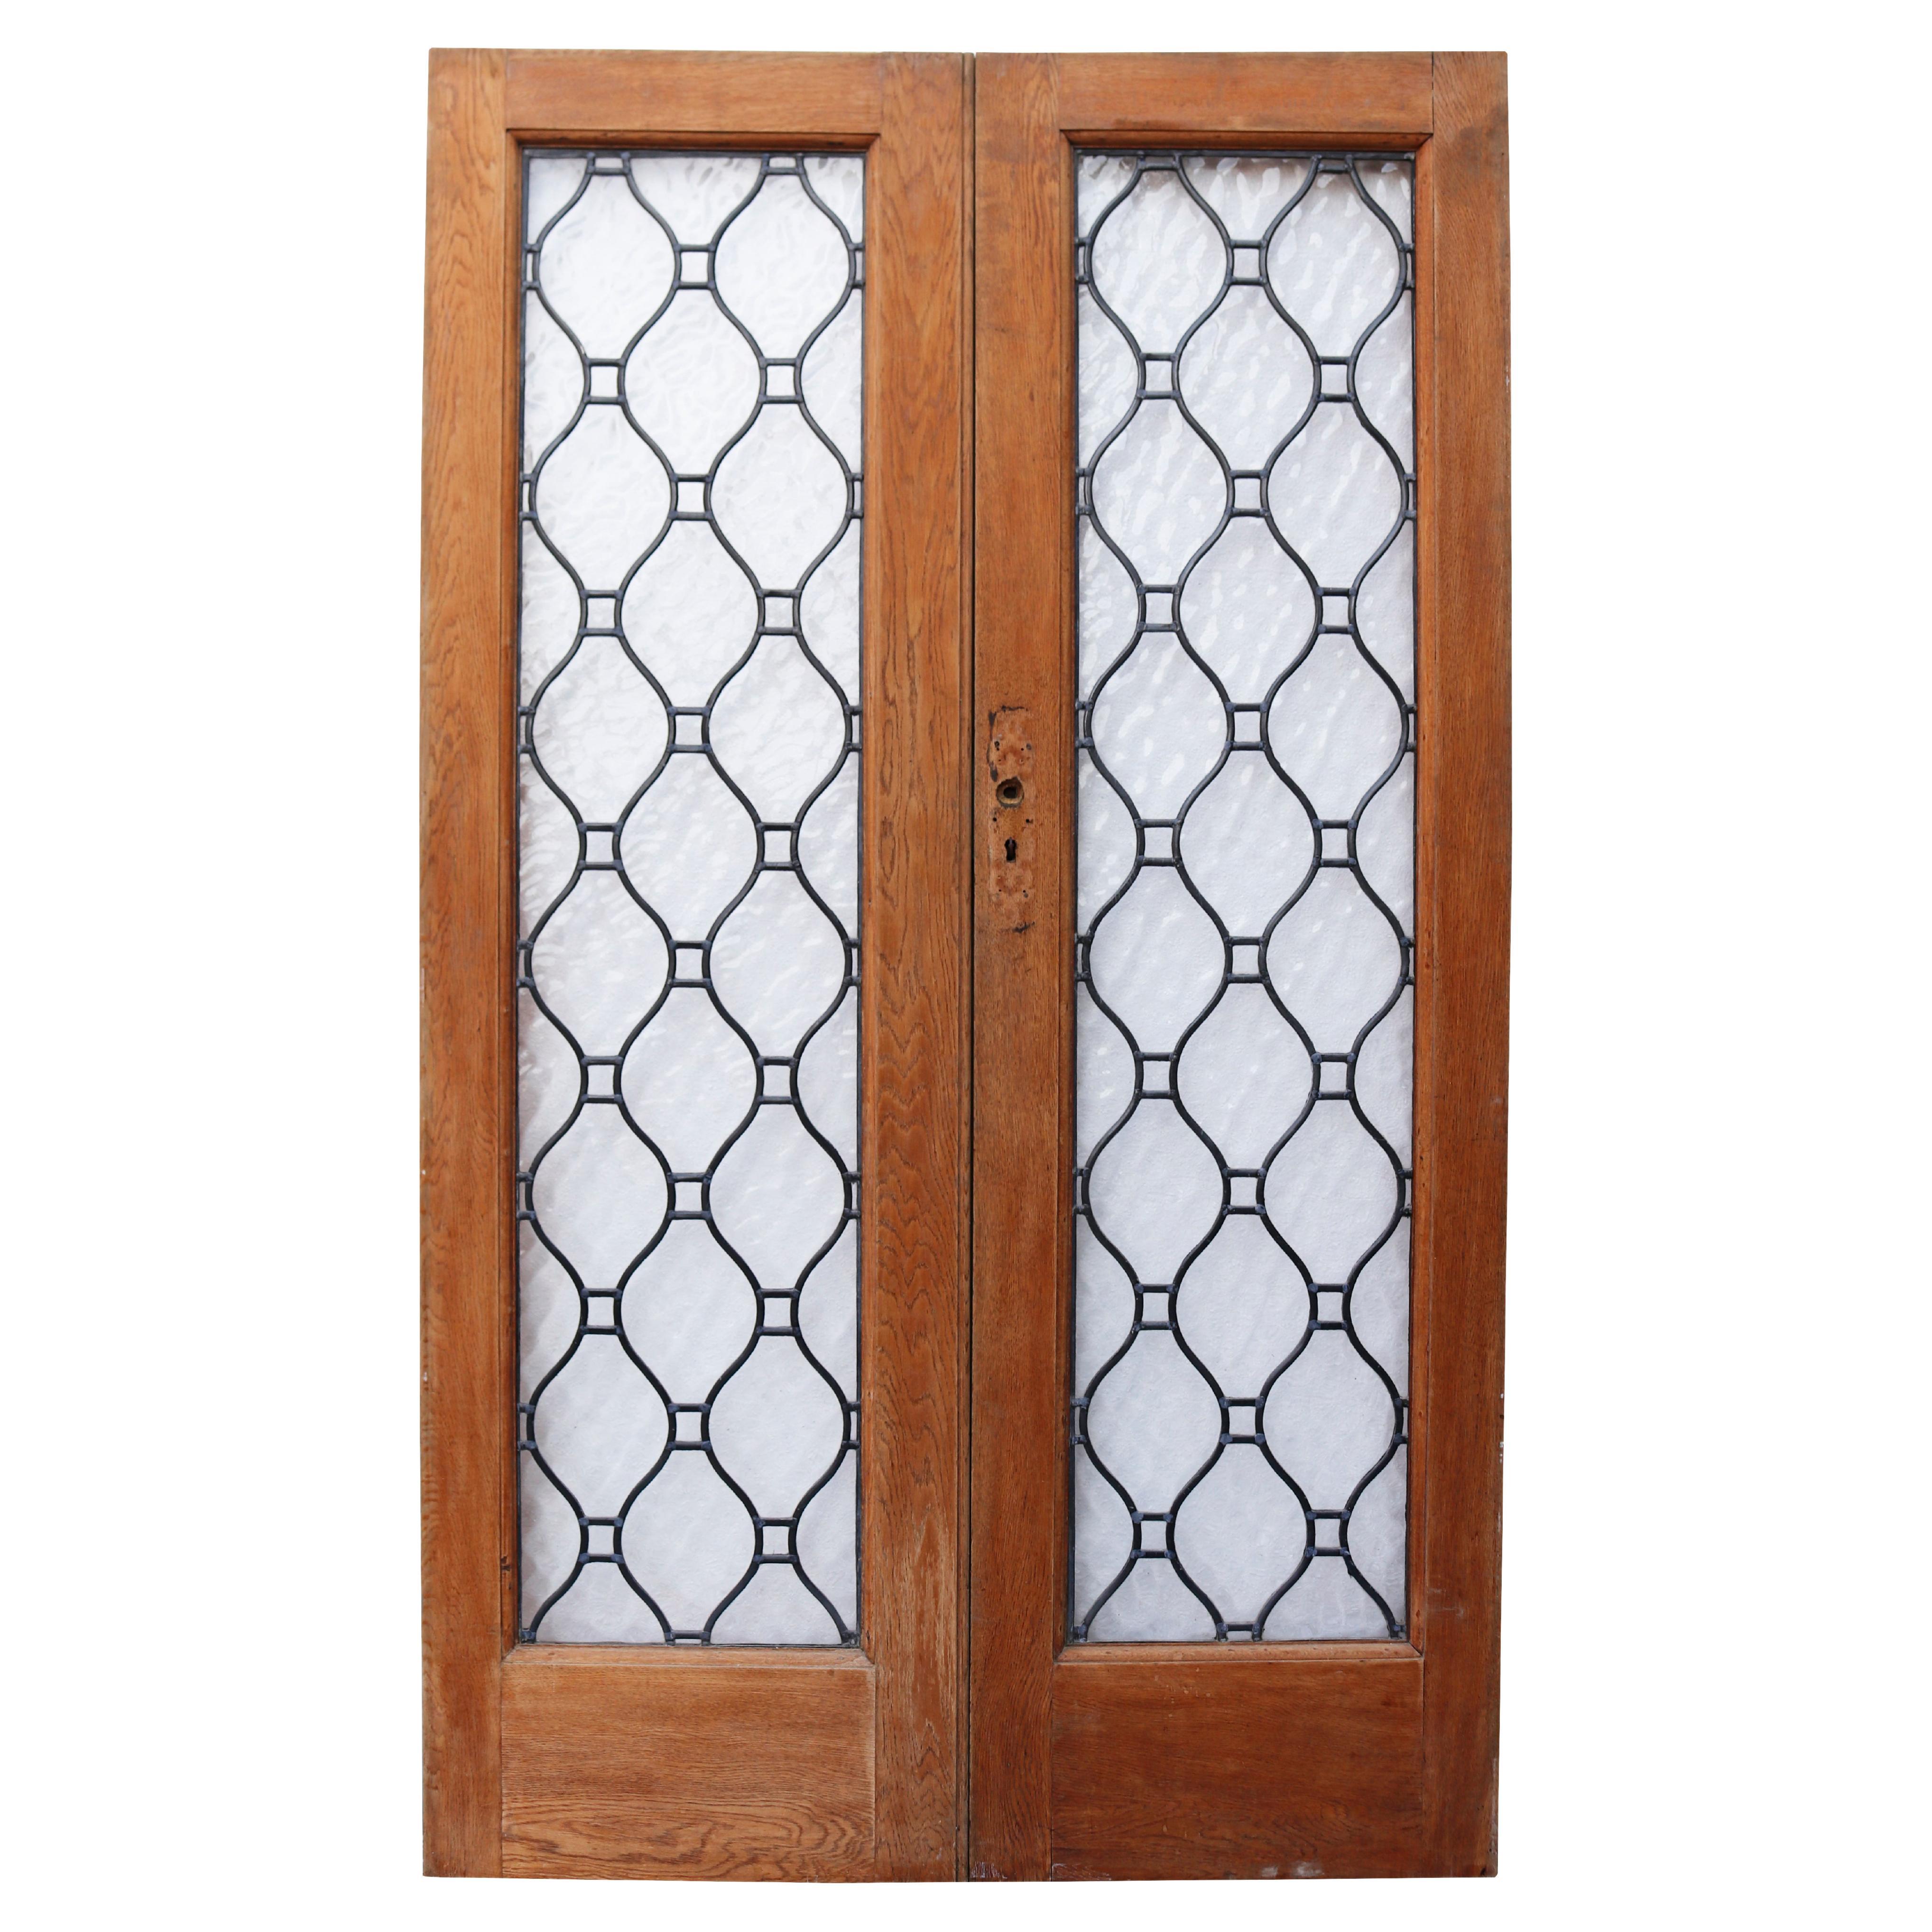 Set of Antique Glazed Oak Double Doors